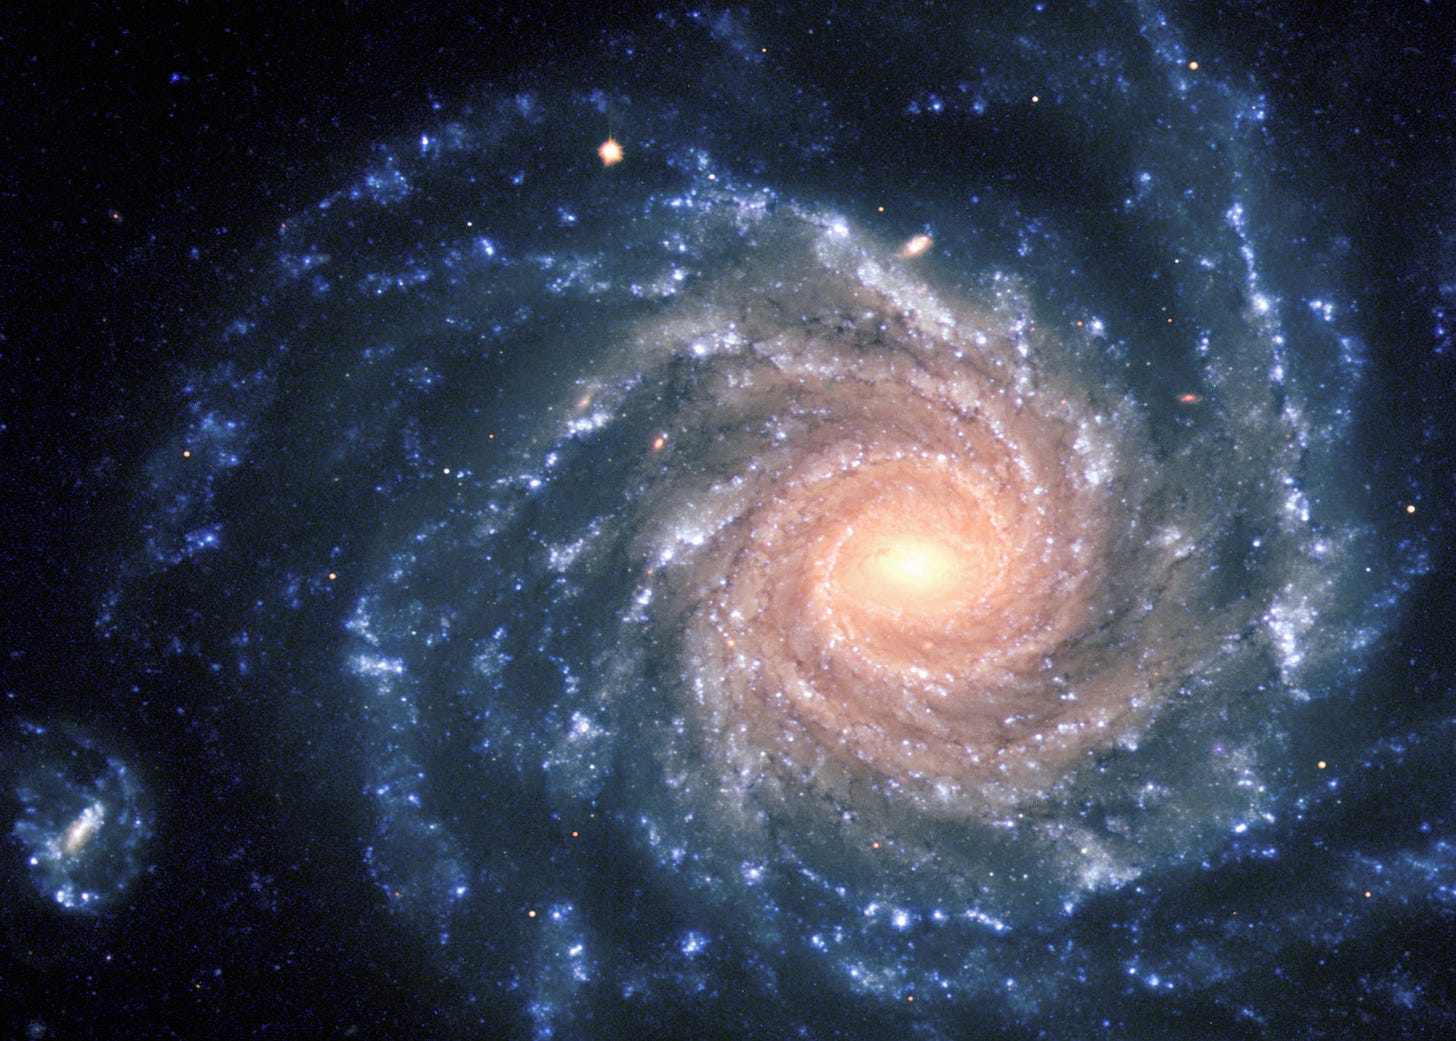 View of a galaxy as seen via telescope.